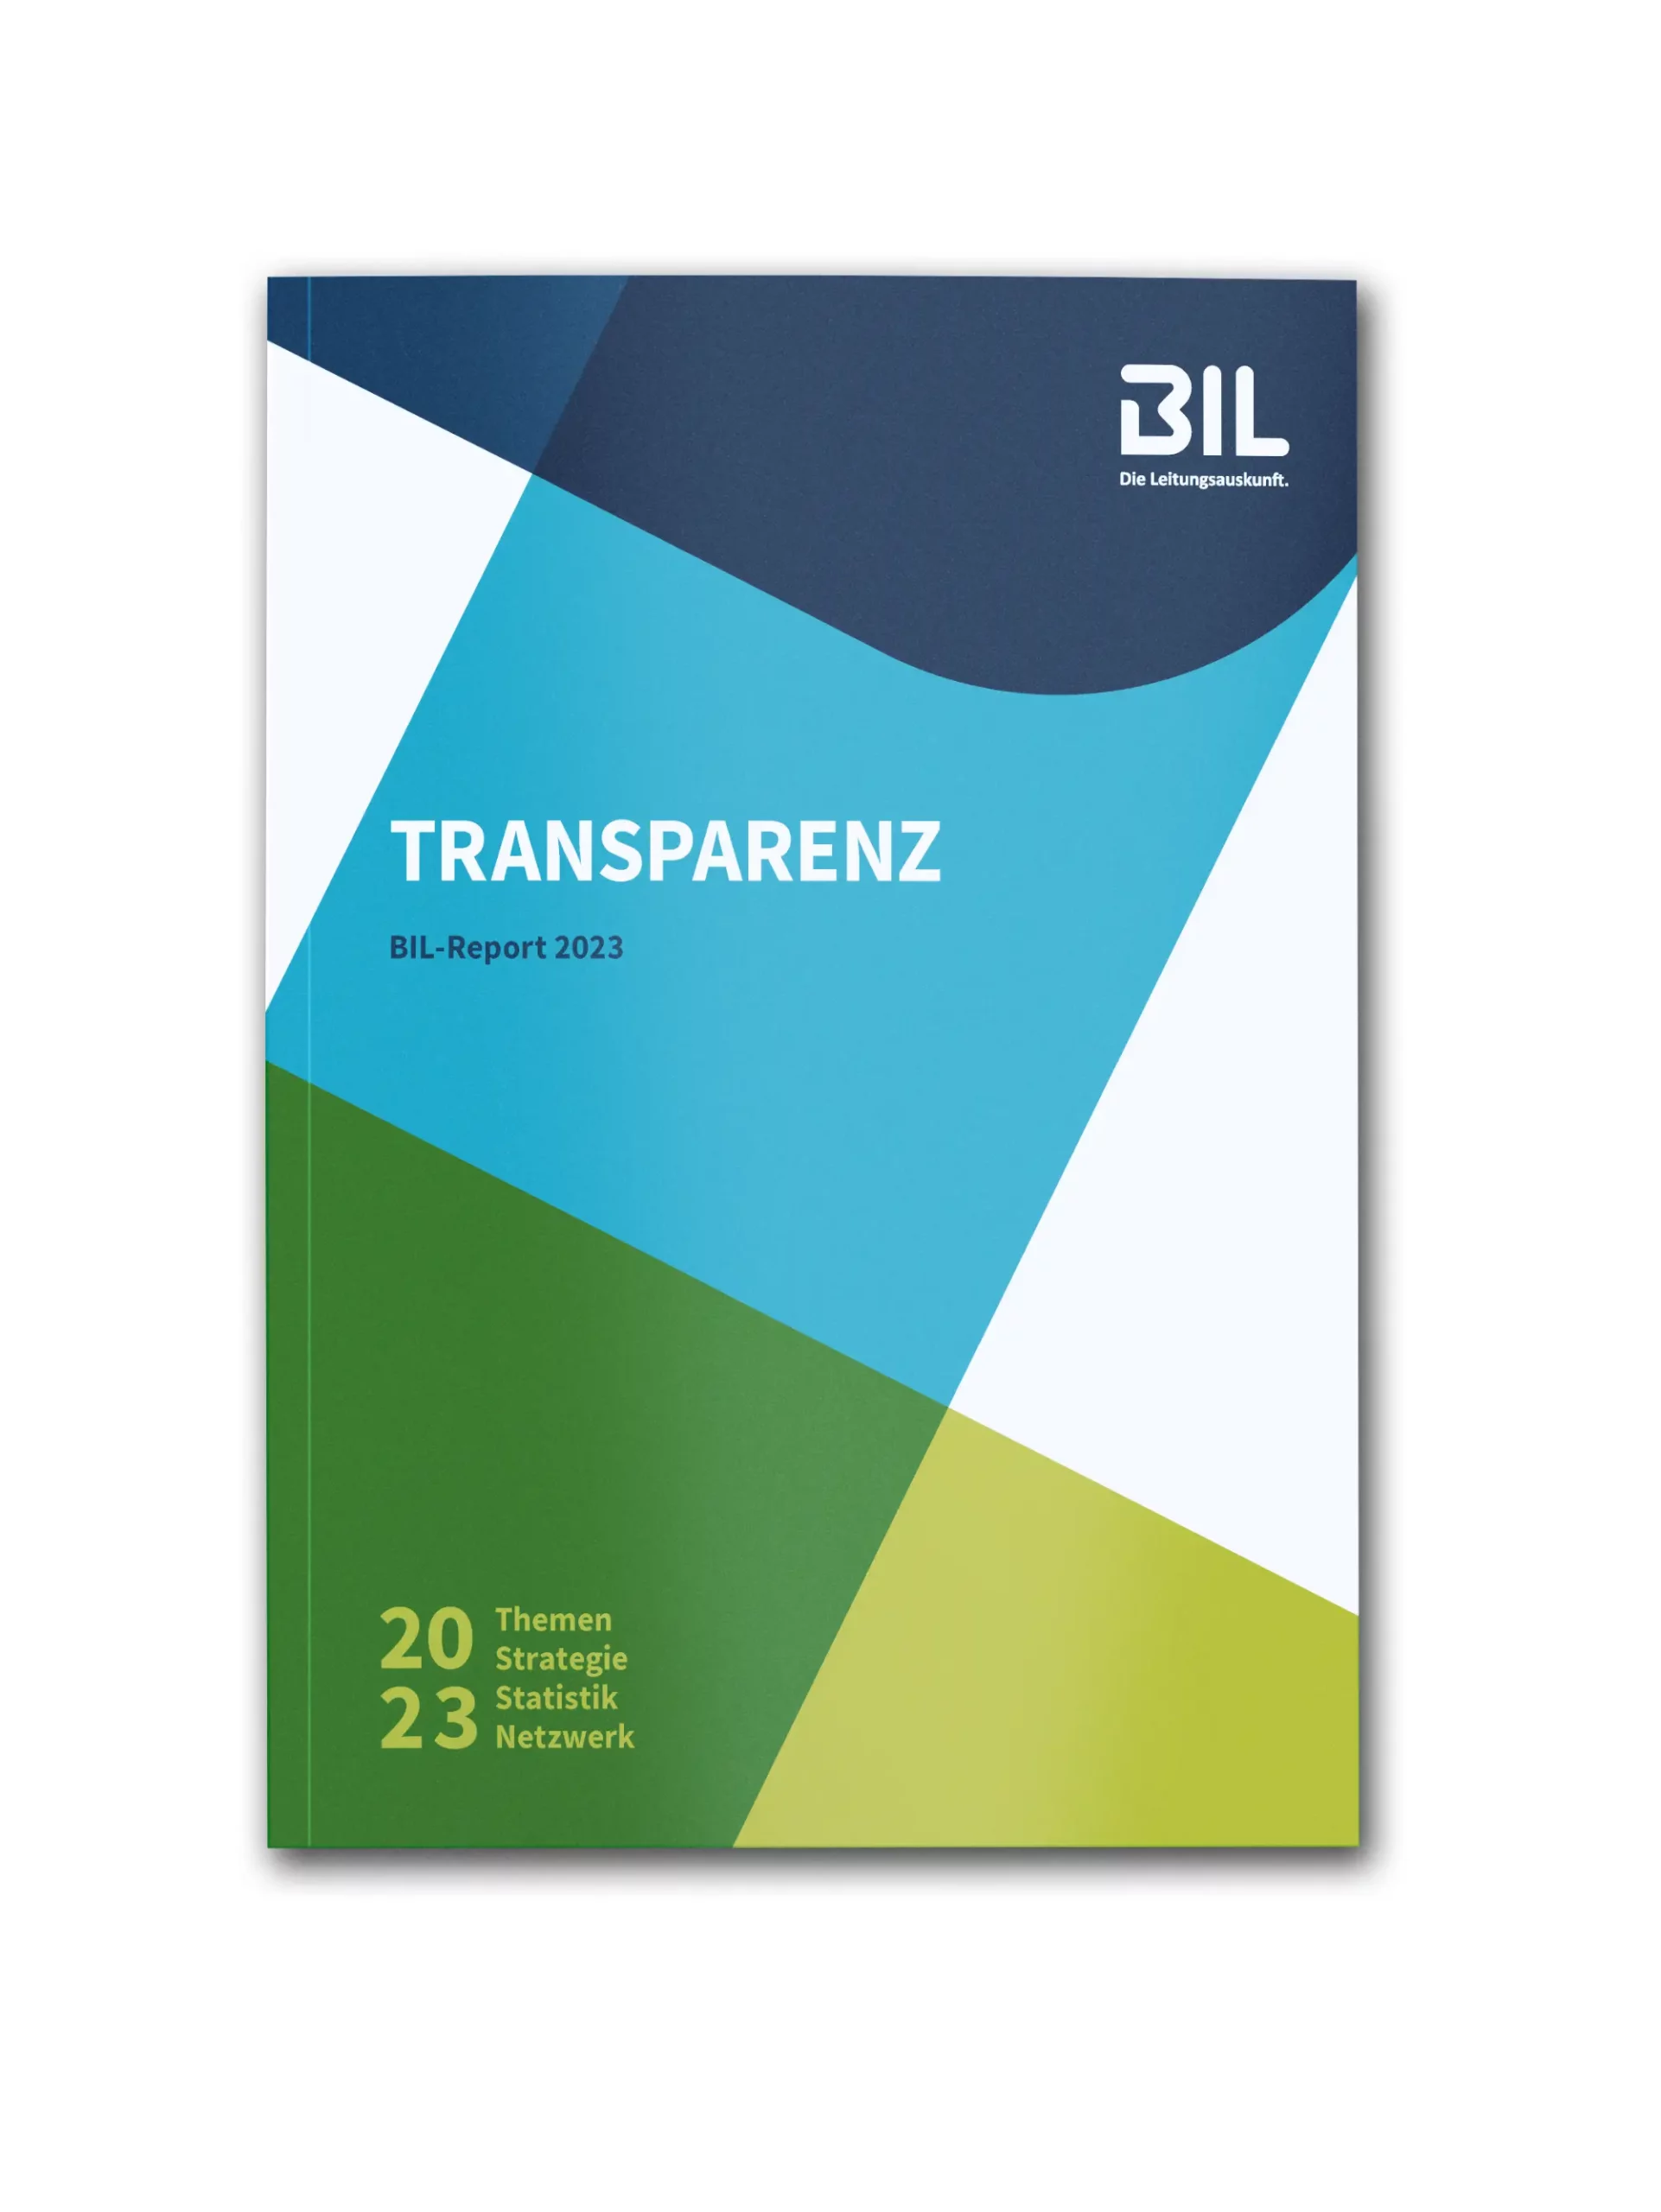 BIL Report 2023 - Transparenz